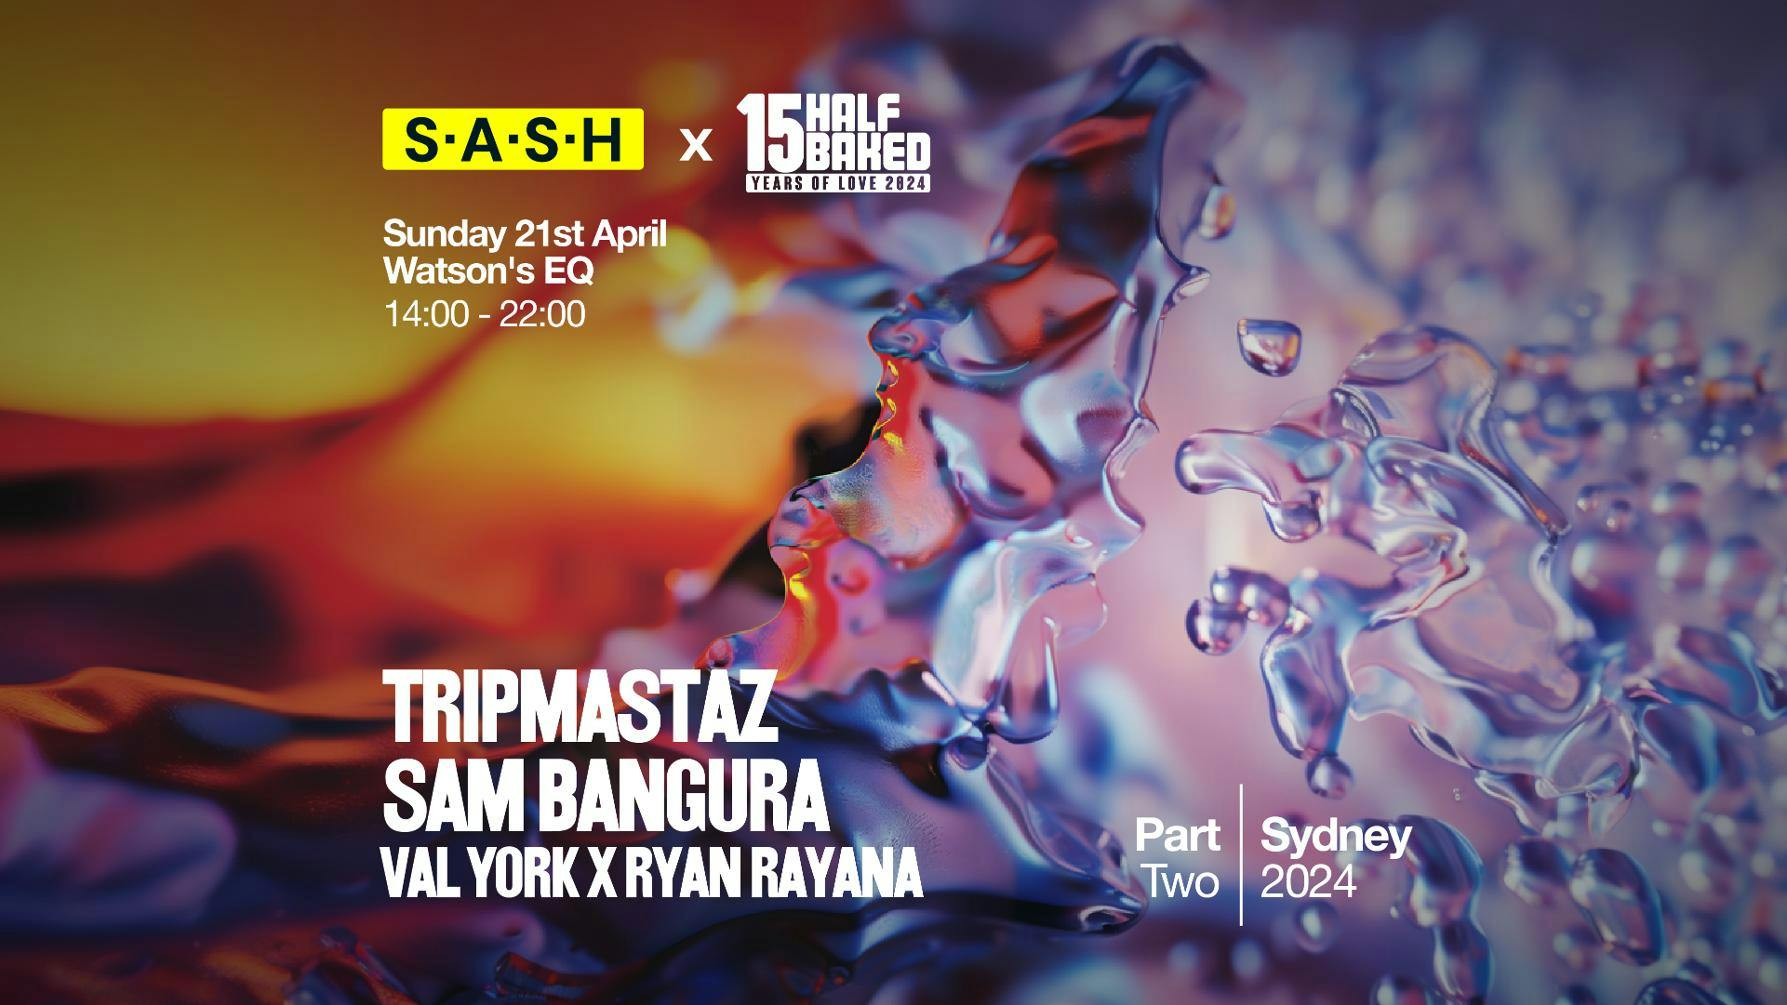 ★ S.A.S.H Presents Half Baked Part Two ★ Tripmastaz & Sam Bangura ★ Sunday April 21st ★